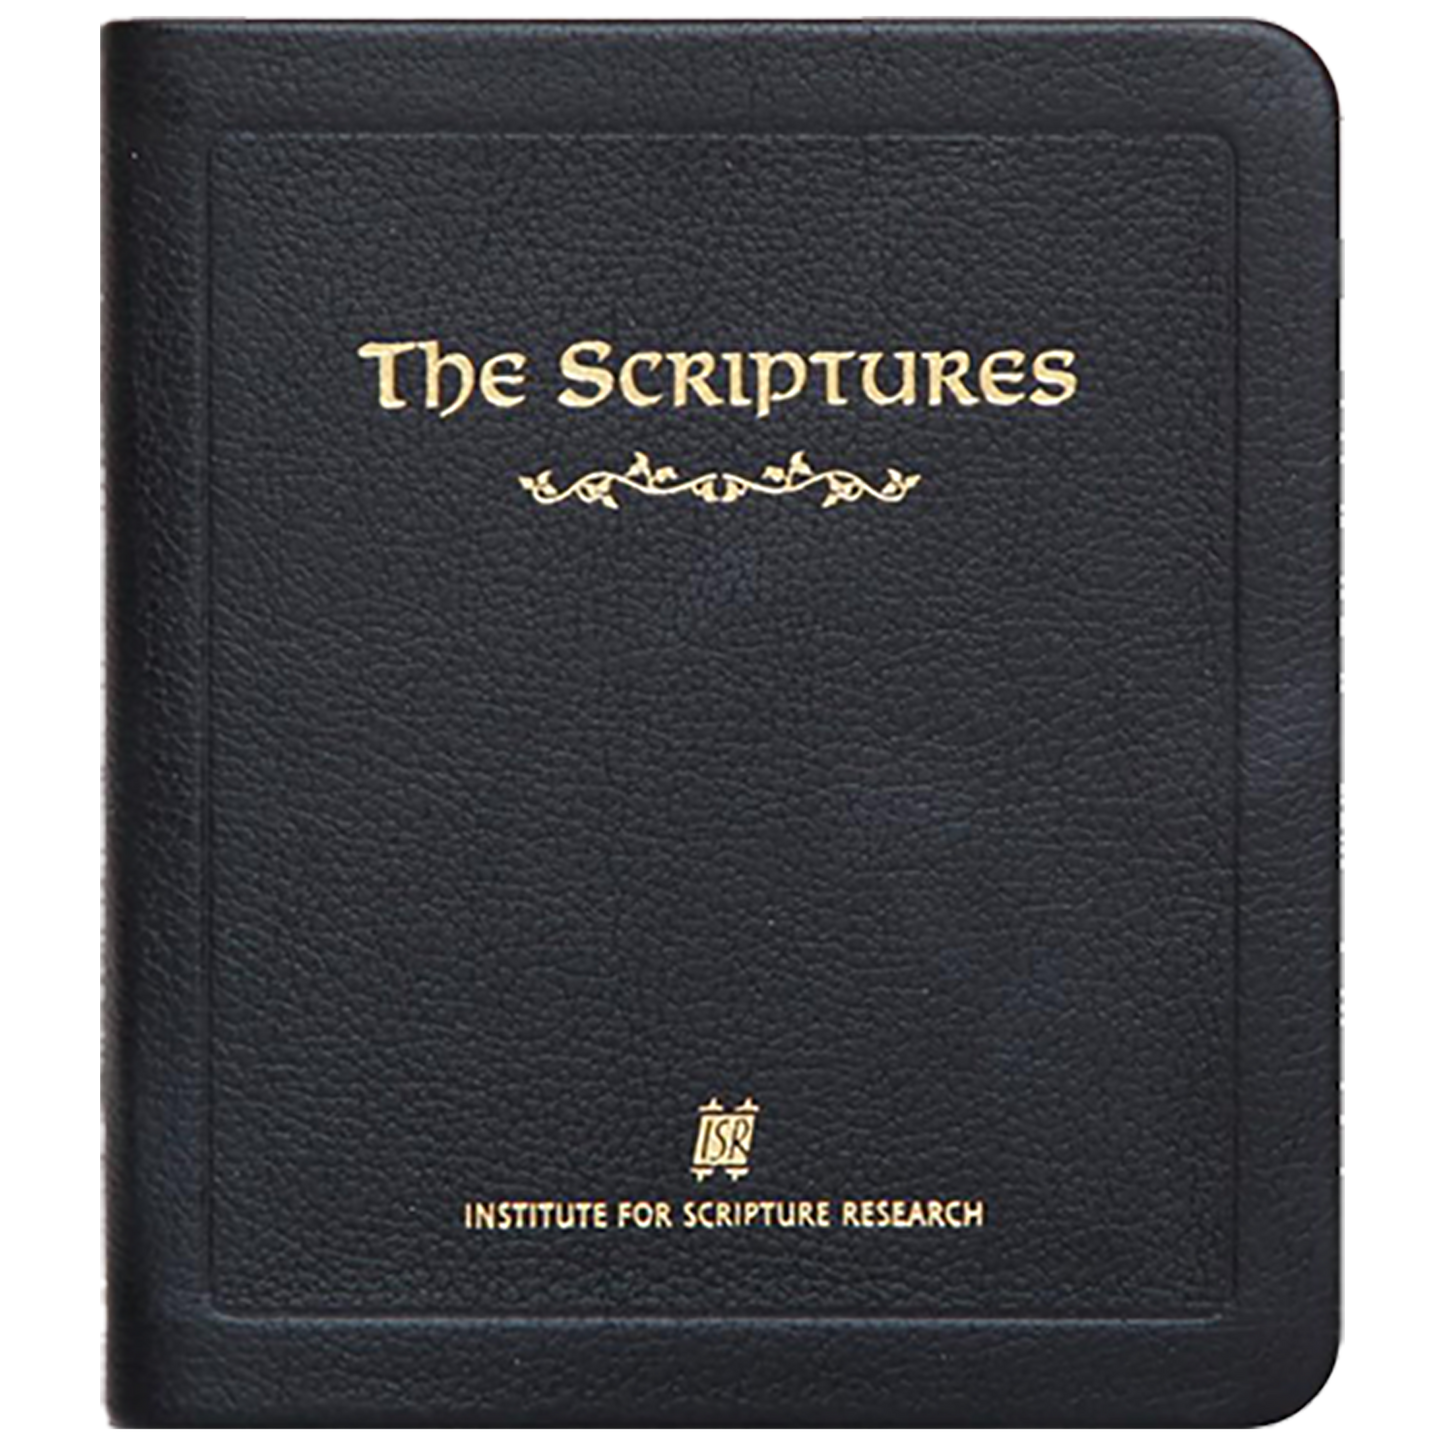 Soft Black Cowhide Leather Pocket Size The Scriptures Bible